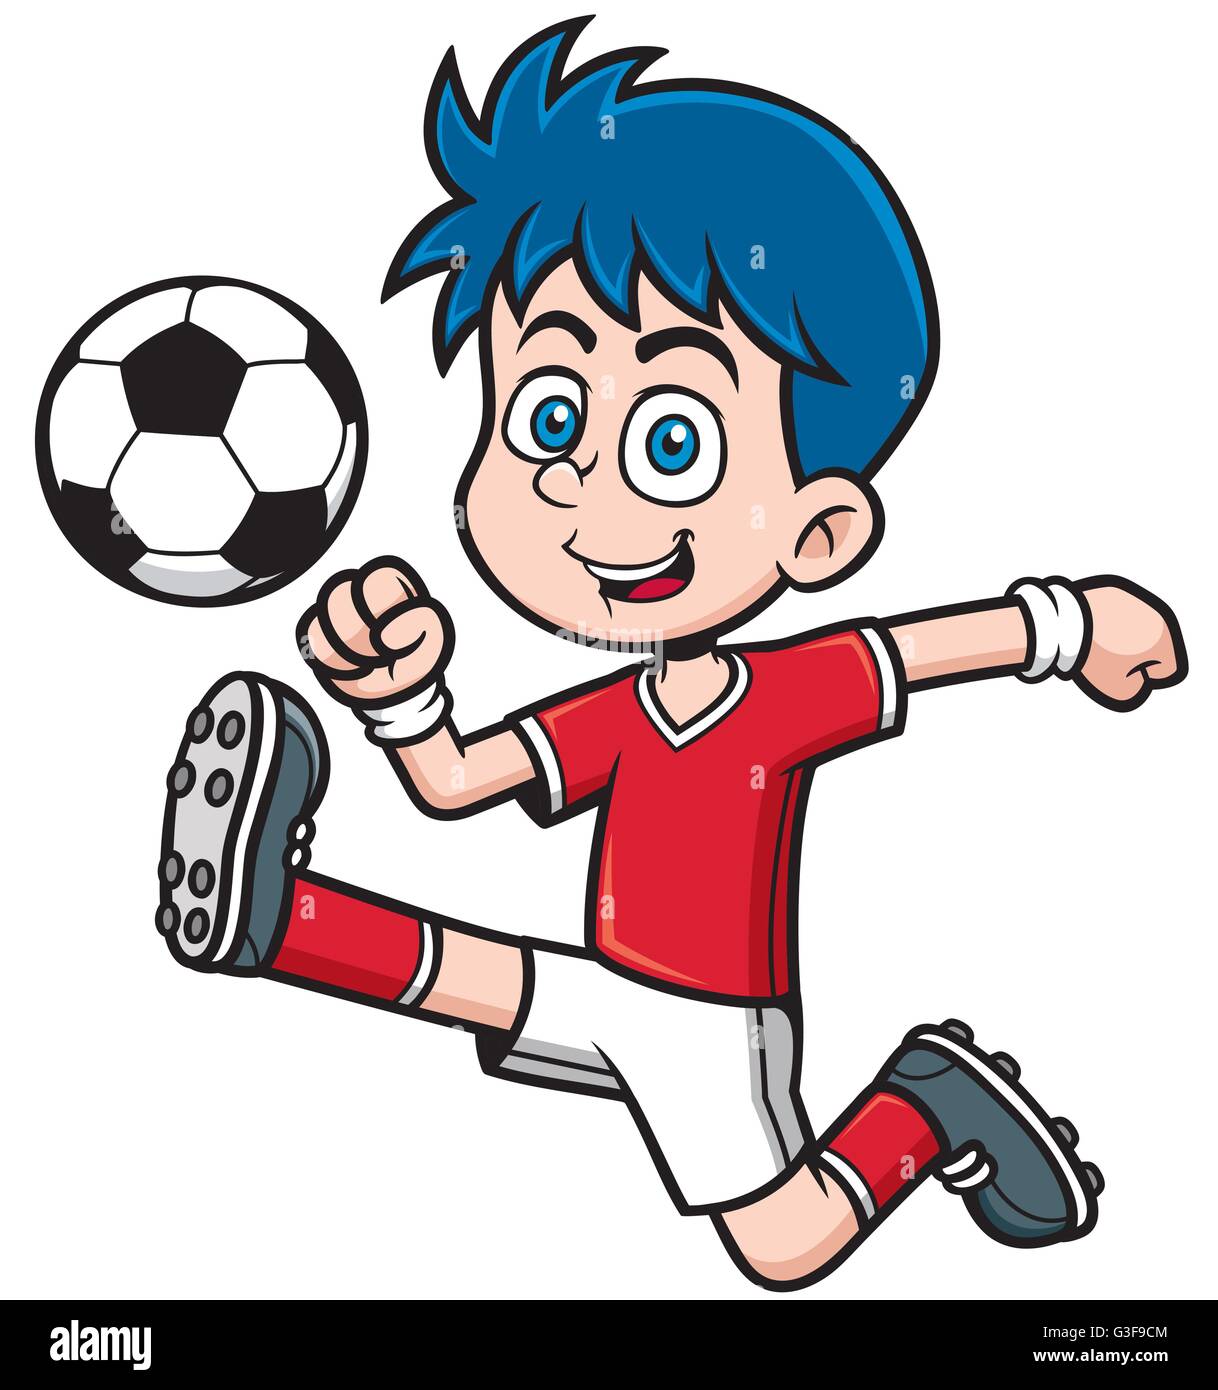 Vector illustration of Soccer player cartoon Stock Vector Image & Art